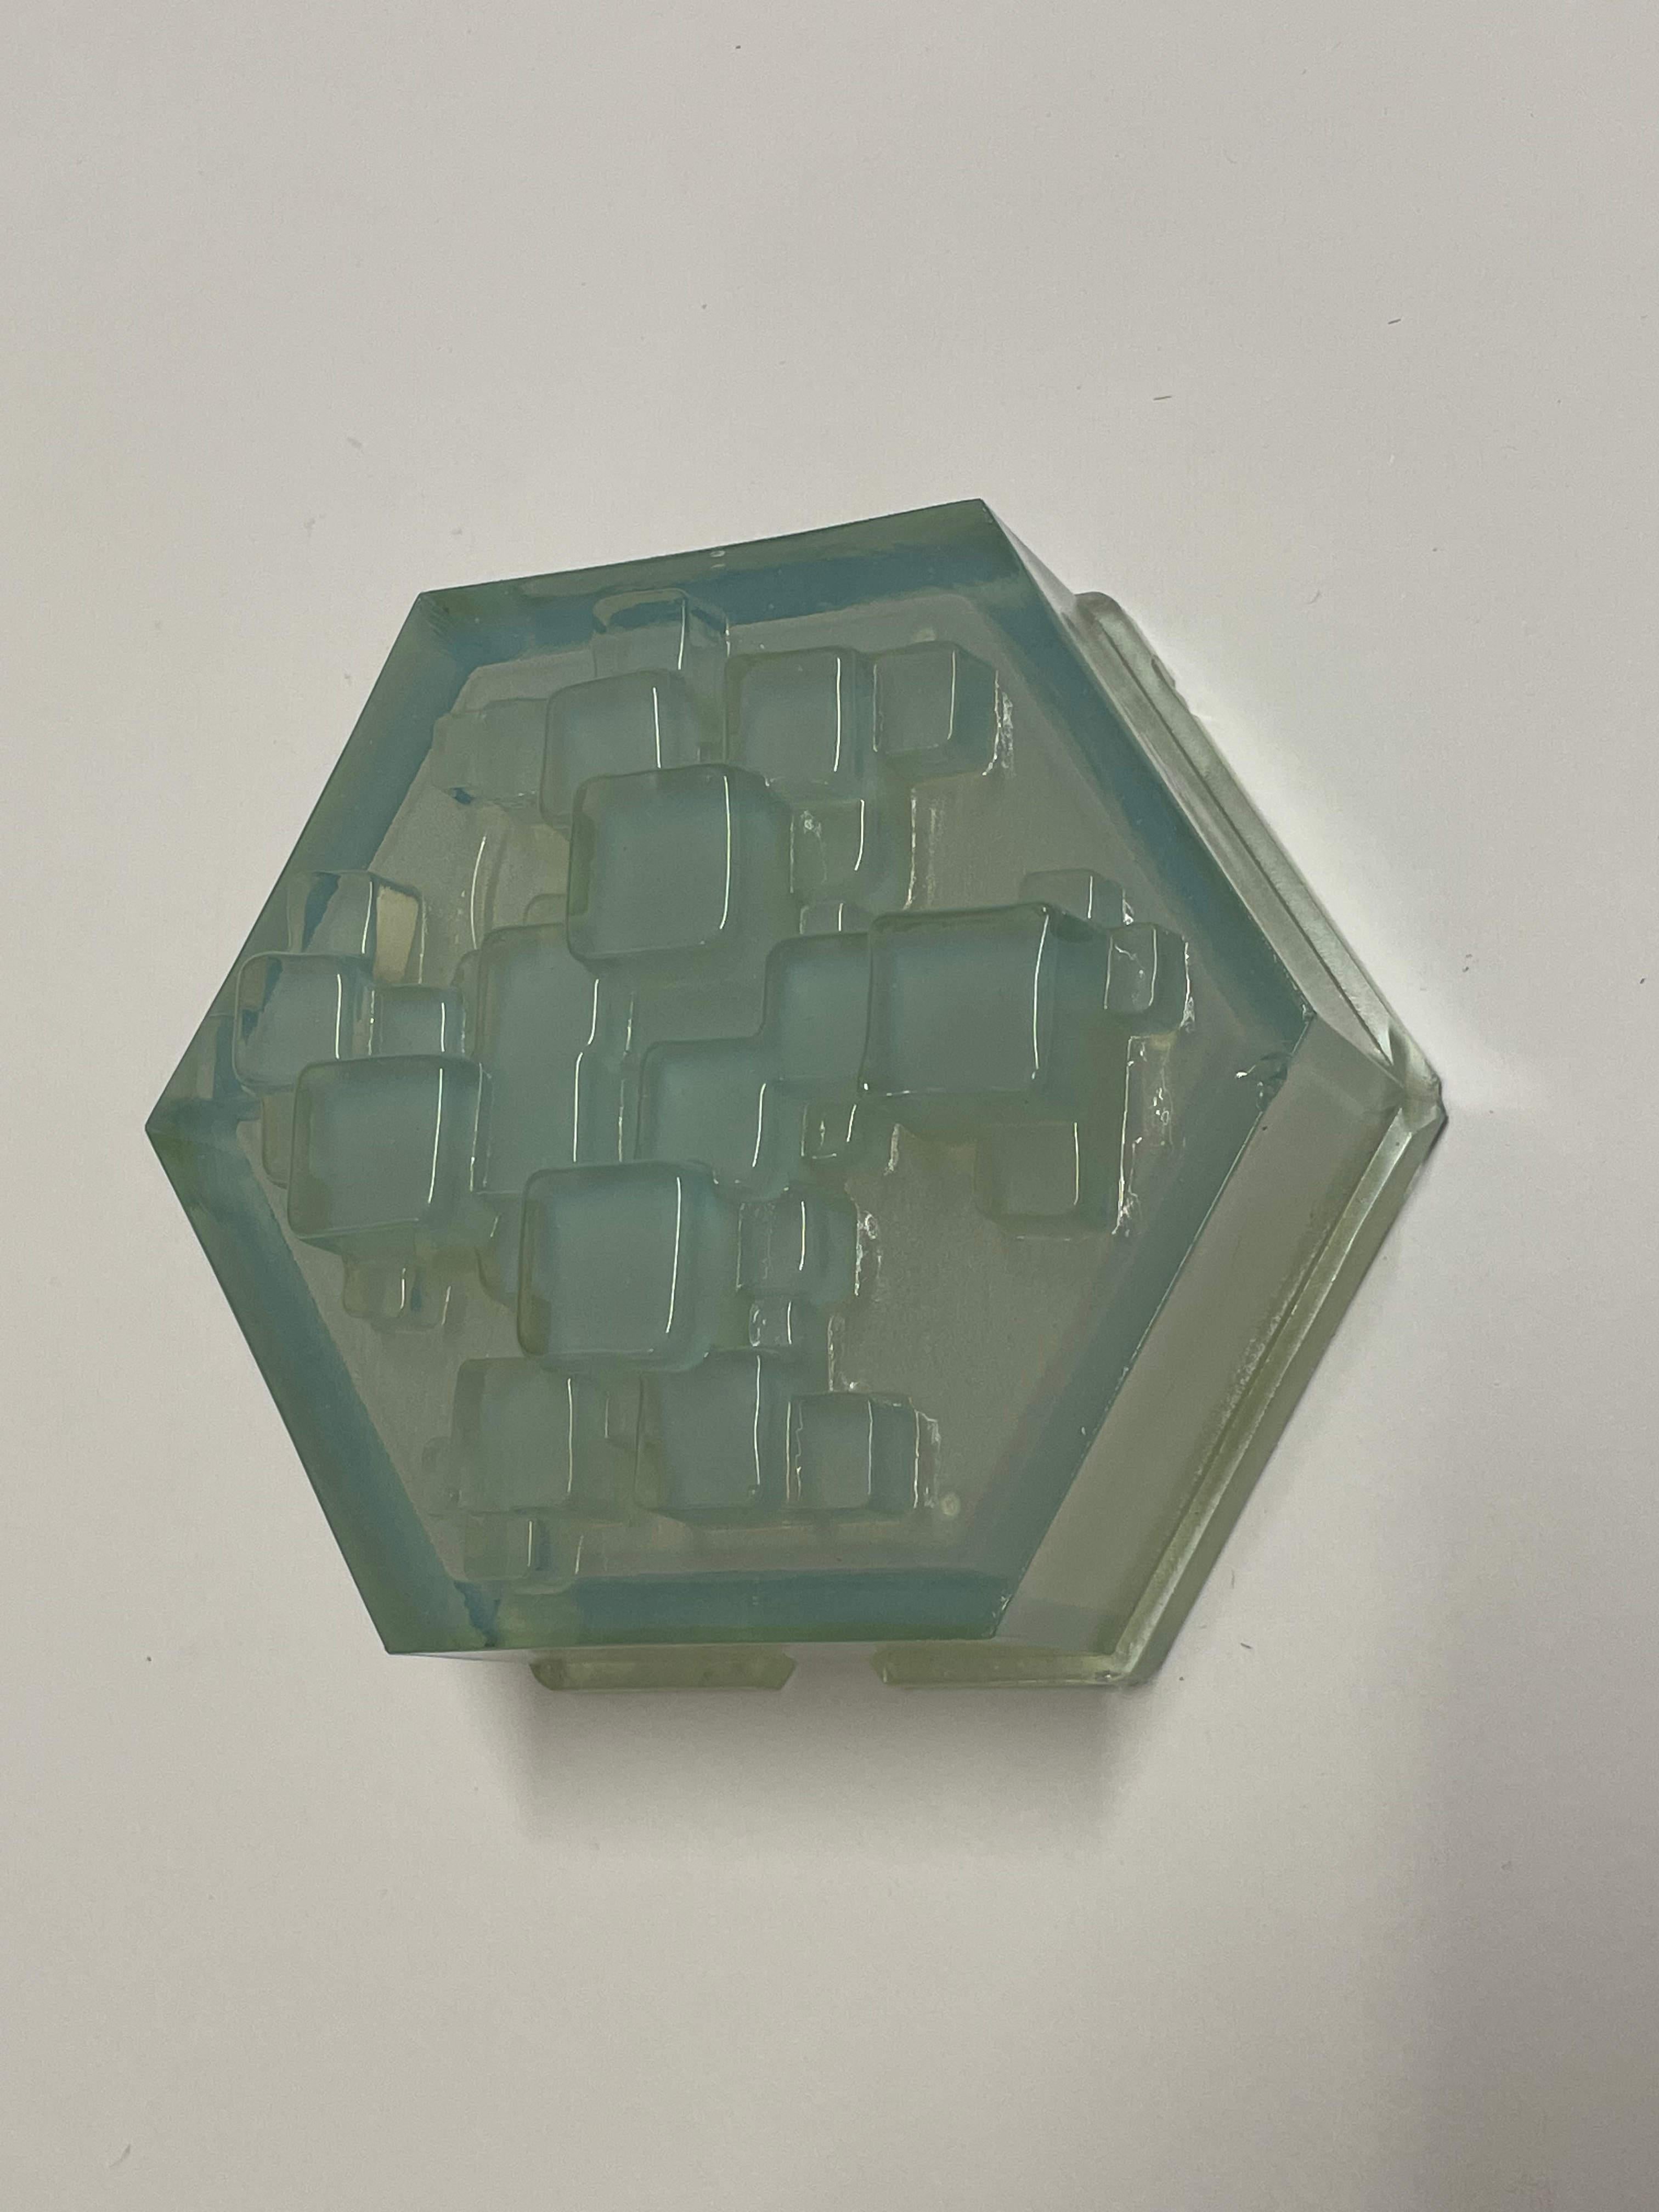 Hexagonal Modular Sconces / Flush Mounts by Poliarte - 4 available For Sale 5